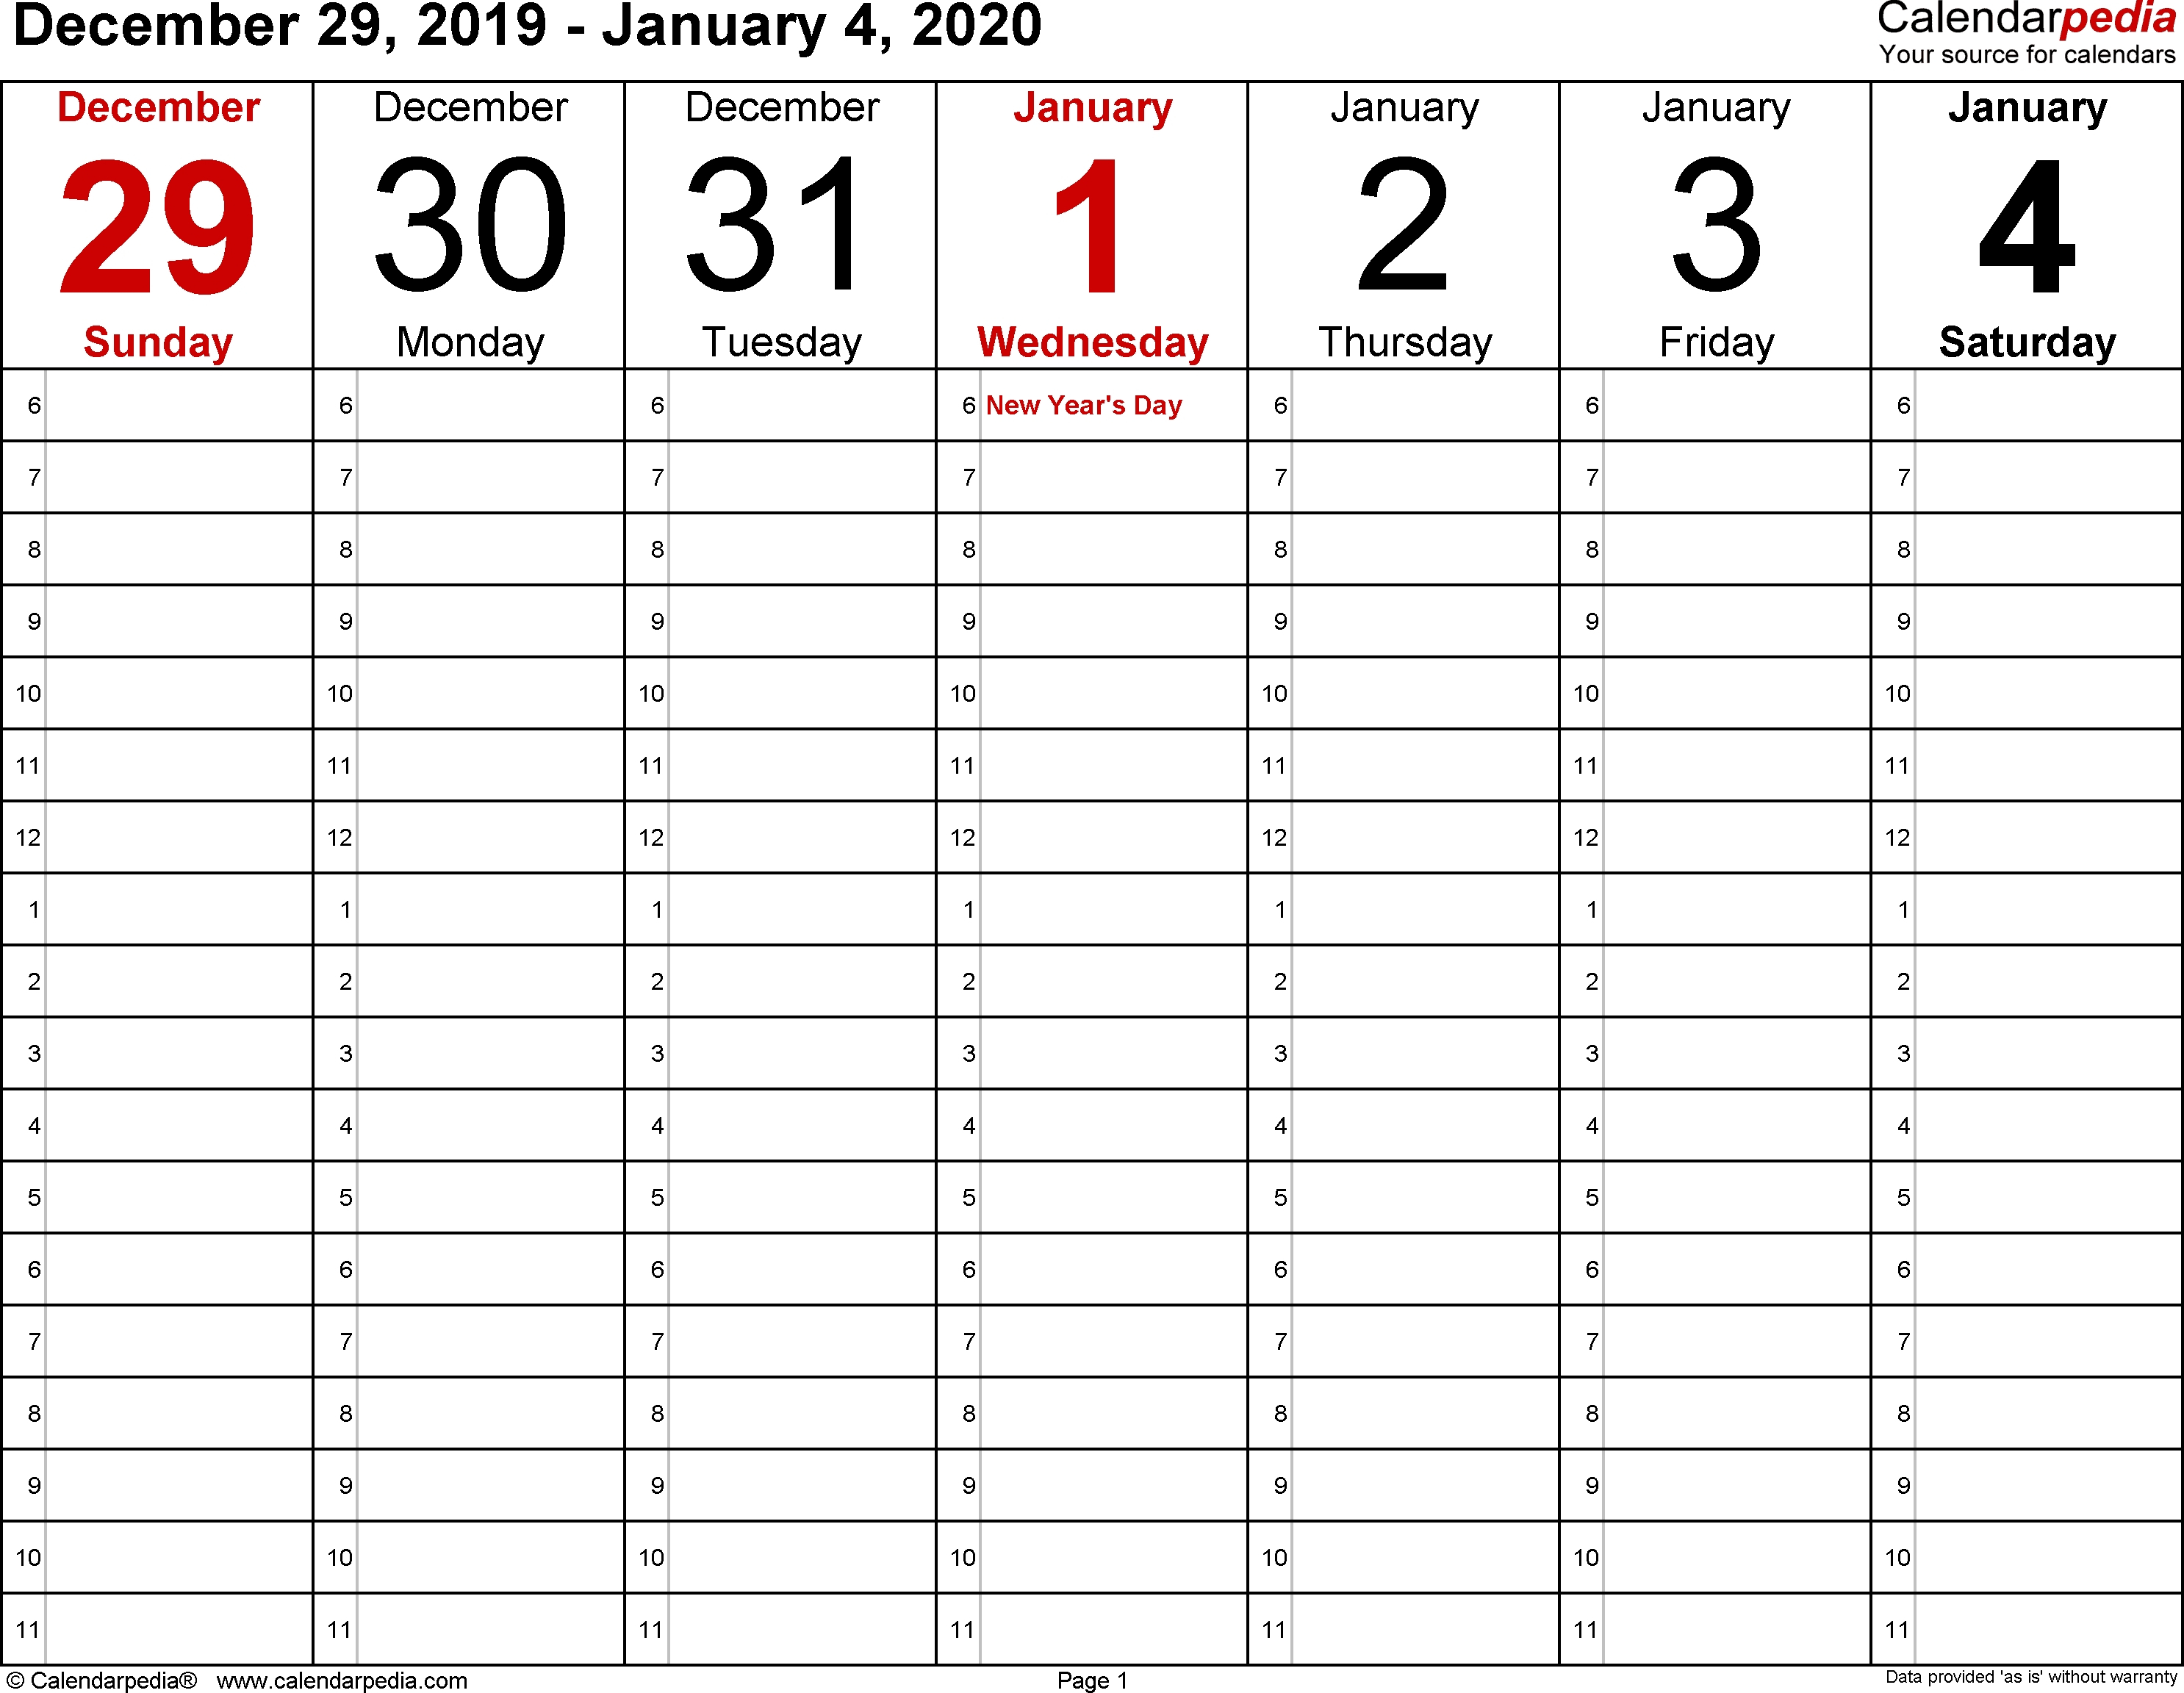 Excel Calendar Week 53 | Igotlockedout